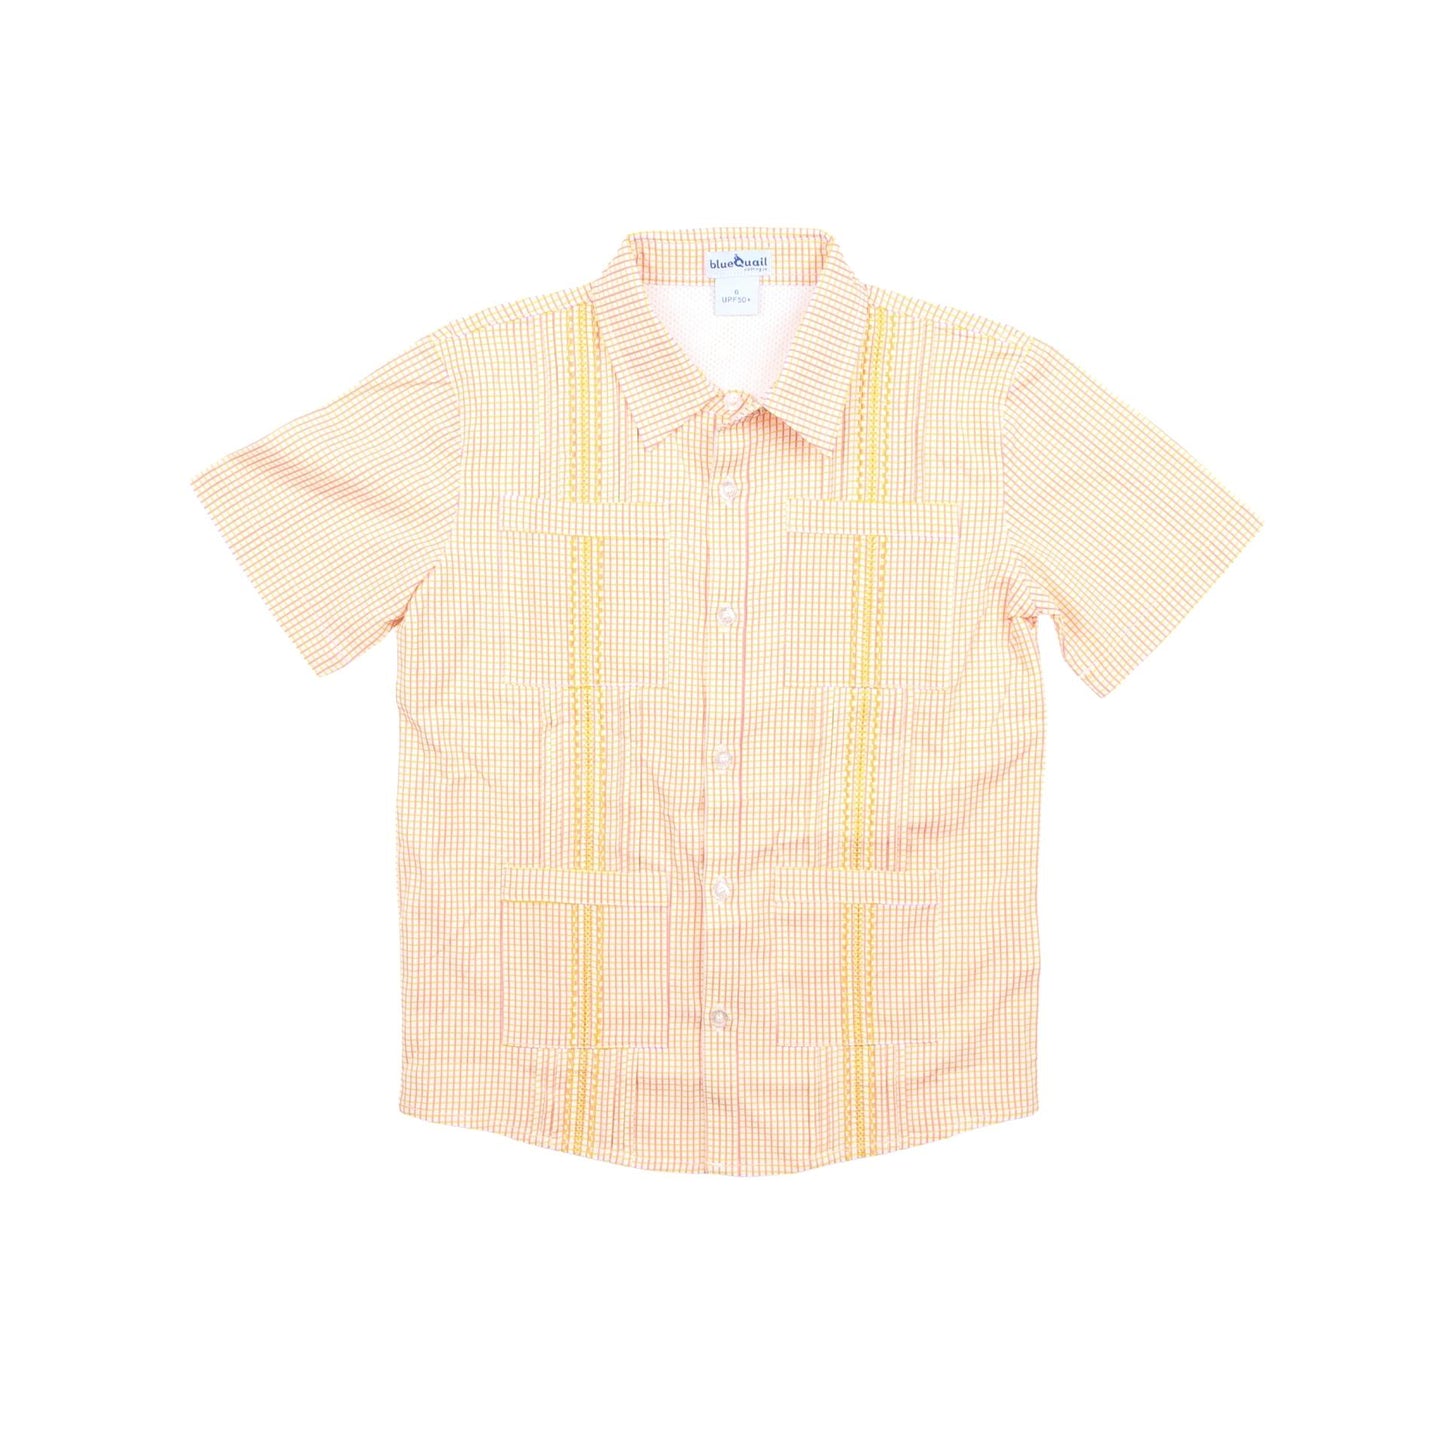 Guayabera - Pink/Citrus Check Short Sleeve Shirt